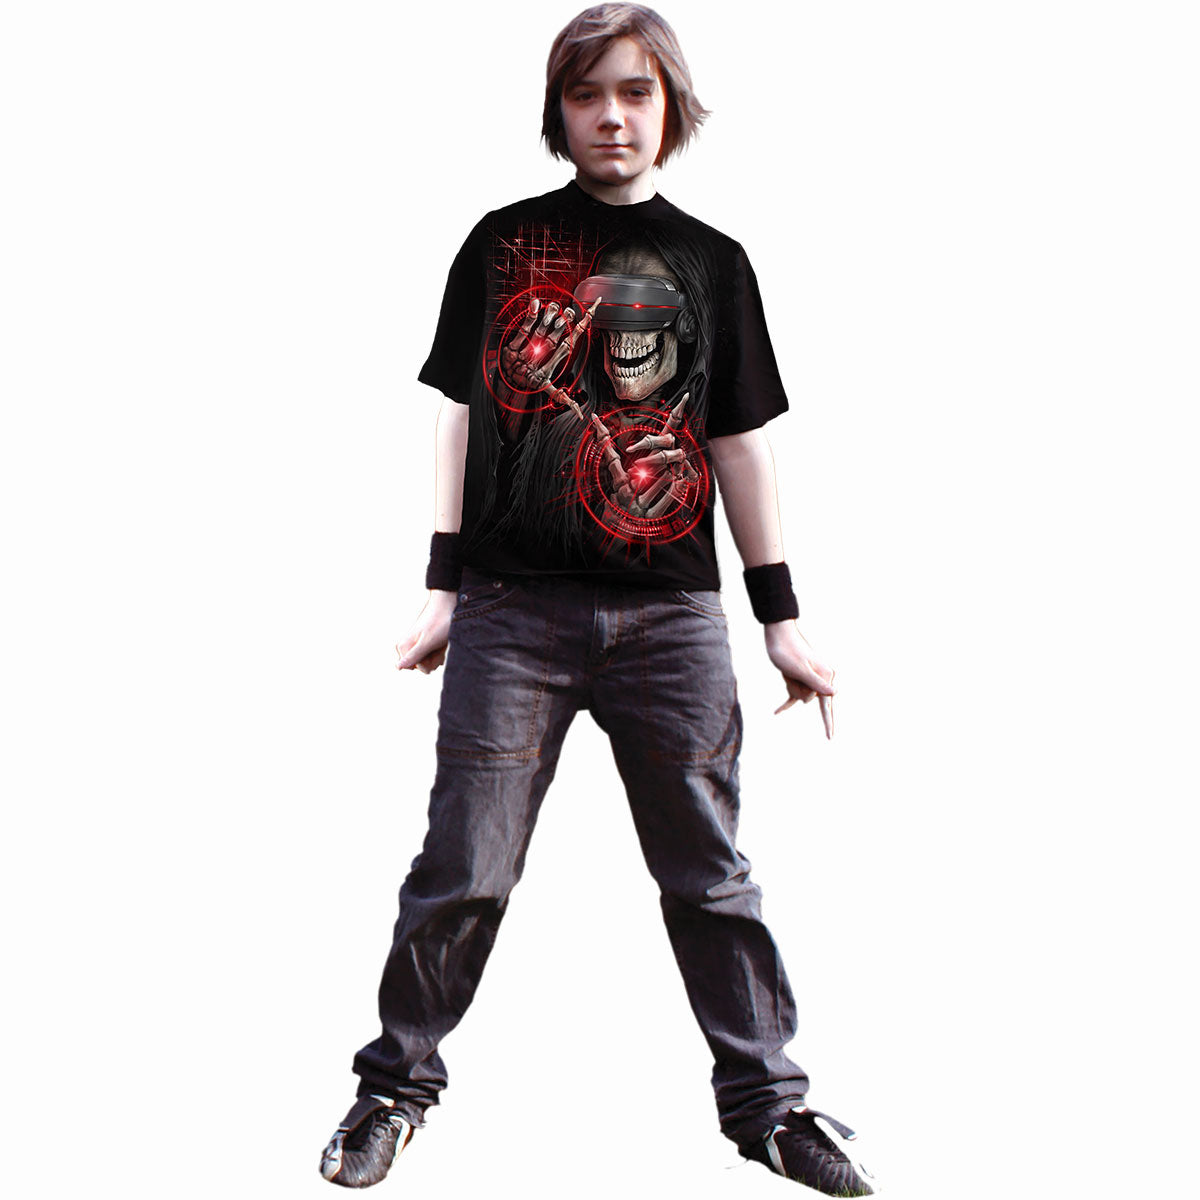 Spiral - Grim Rocker - T-Shirt Black - S